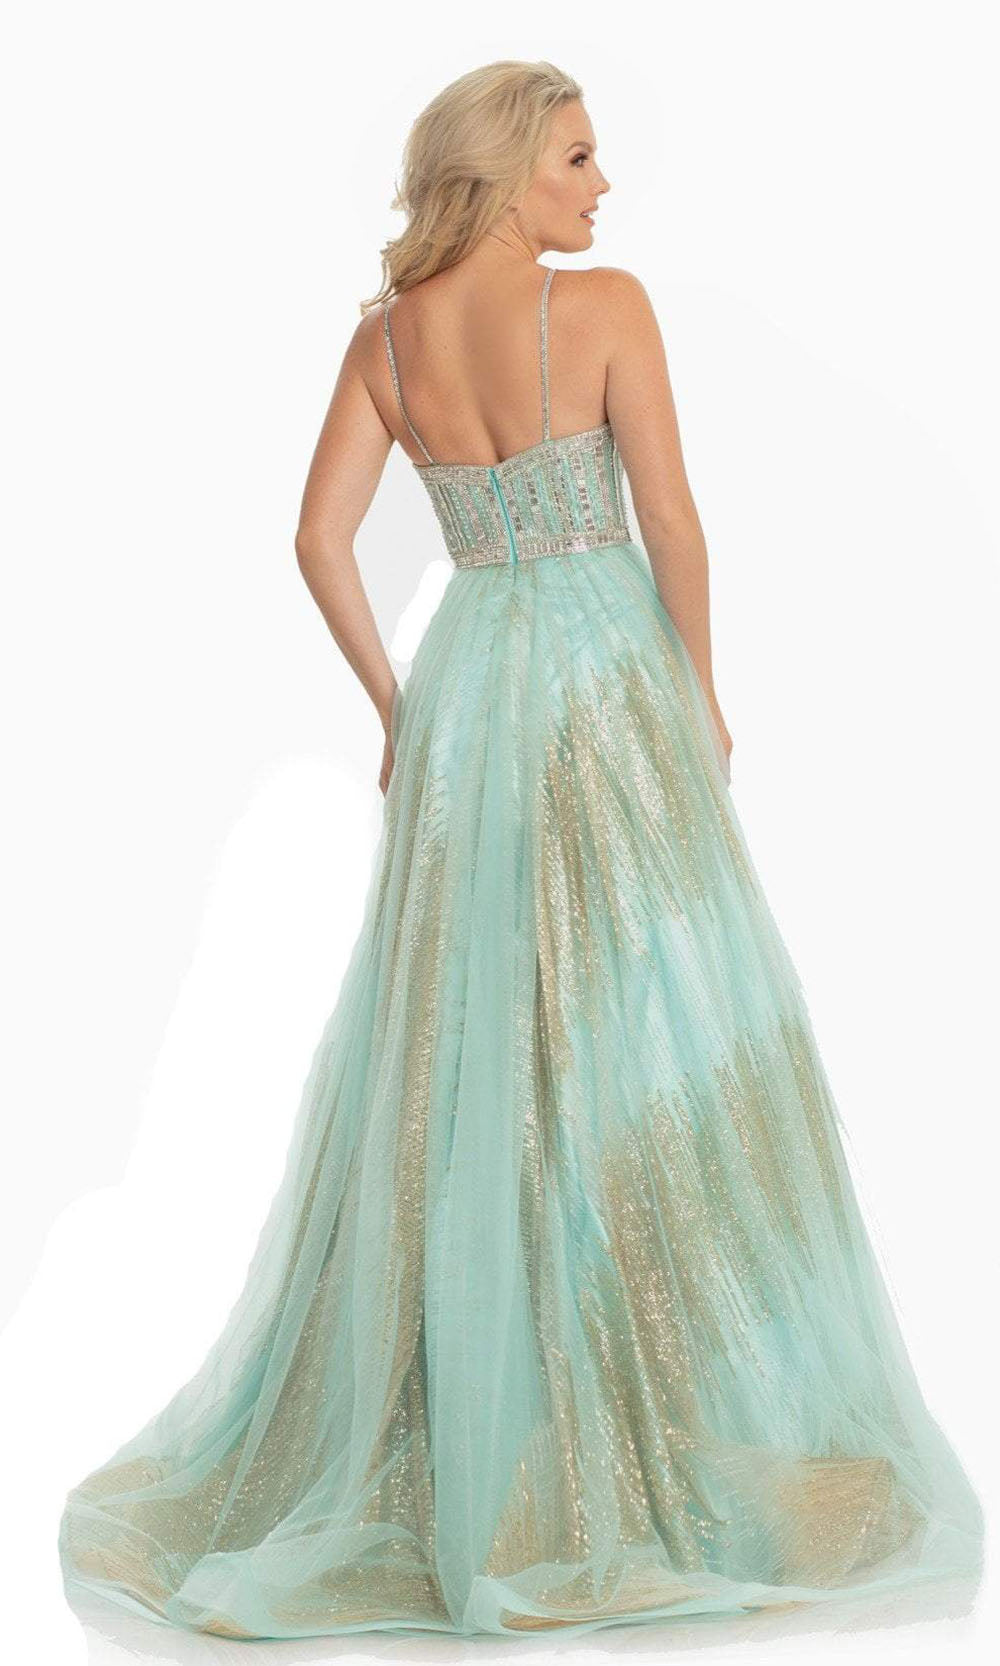 Johnathan Kayne - Spaghetti Strap Glitter Mesh A-Line Gown 9067 - 1 pc Aqua In Size 14 Available CCSALE 14 / Aqua